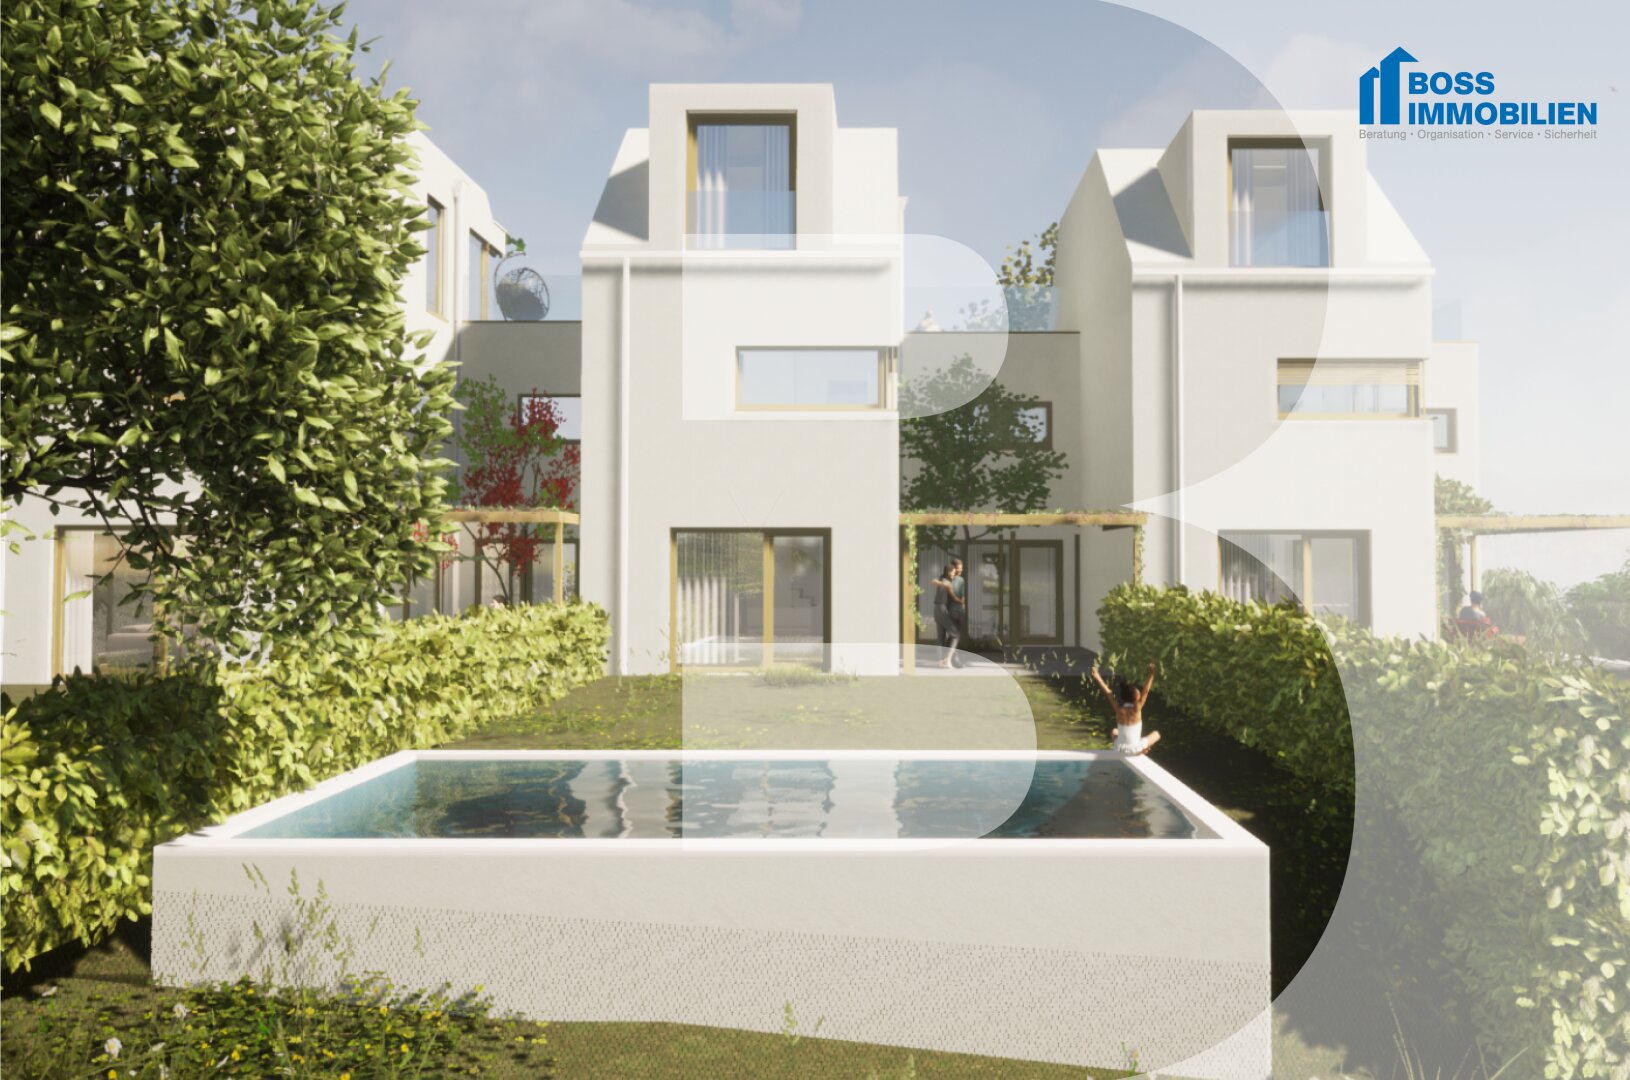 Lebensstil in Perfektion: Exklusive Immobilie mit Pool am Pöstlingberg - Titelbild